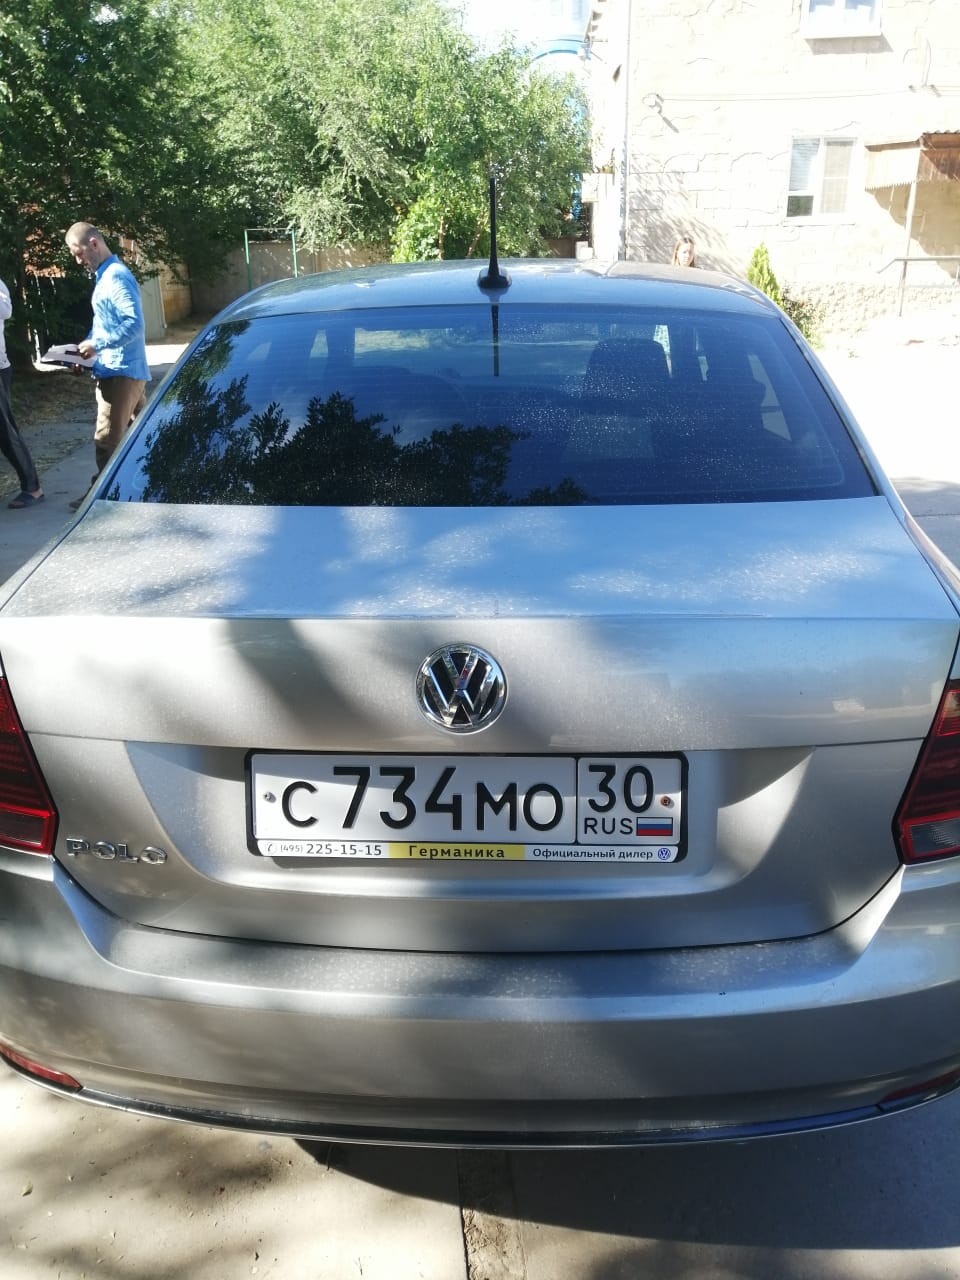 Мусаев И.В. А/м Volkswagen Polo, 2018 г.в, г/н С734МО30, VIN XW8ZZZ61ZJ047354, адрес: Астраханская о